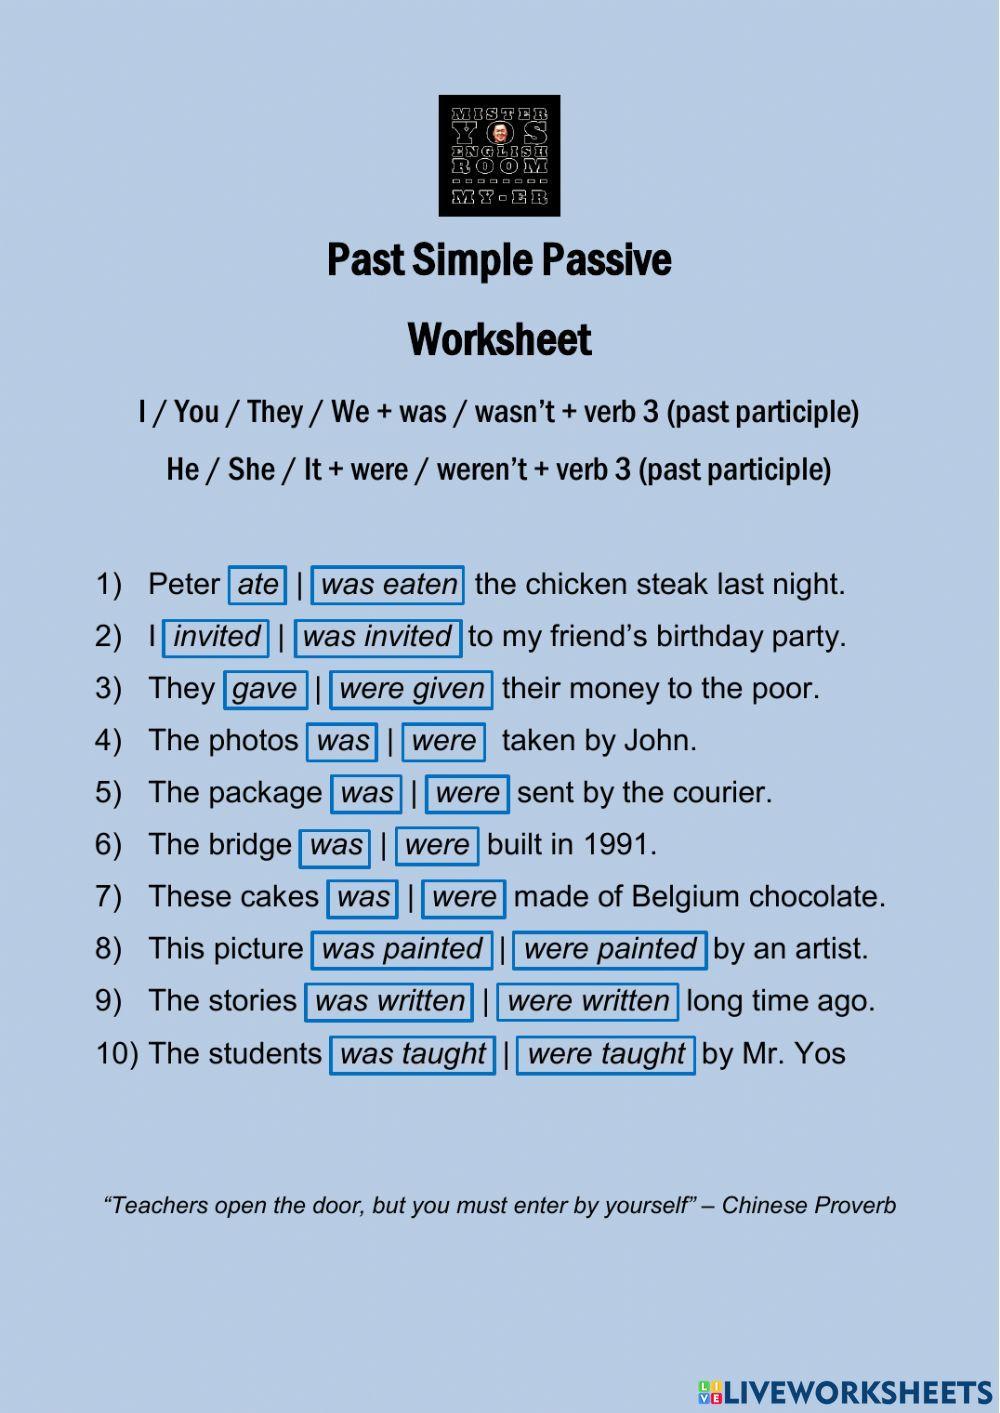 Past Simple Passive Worksheet